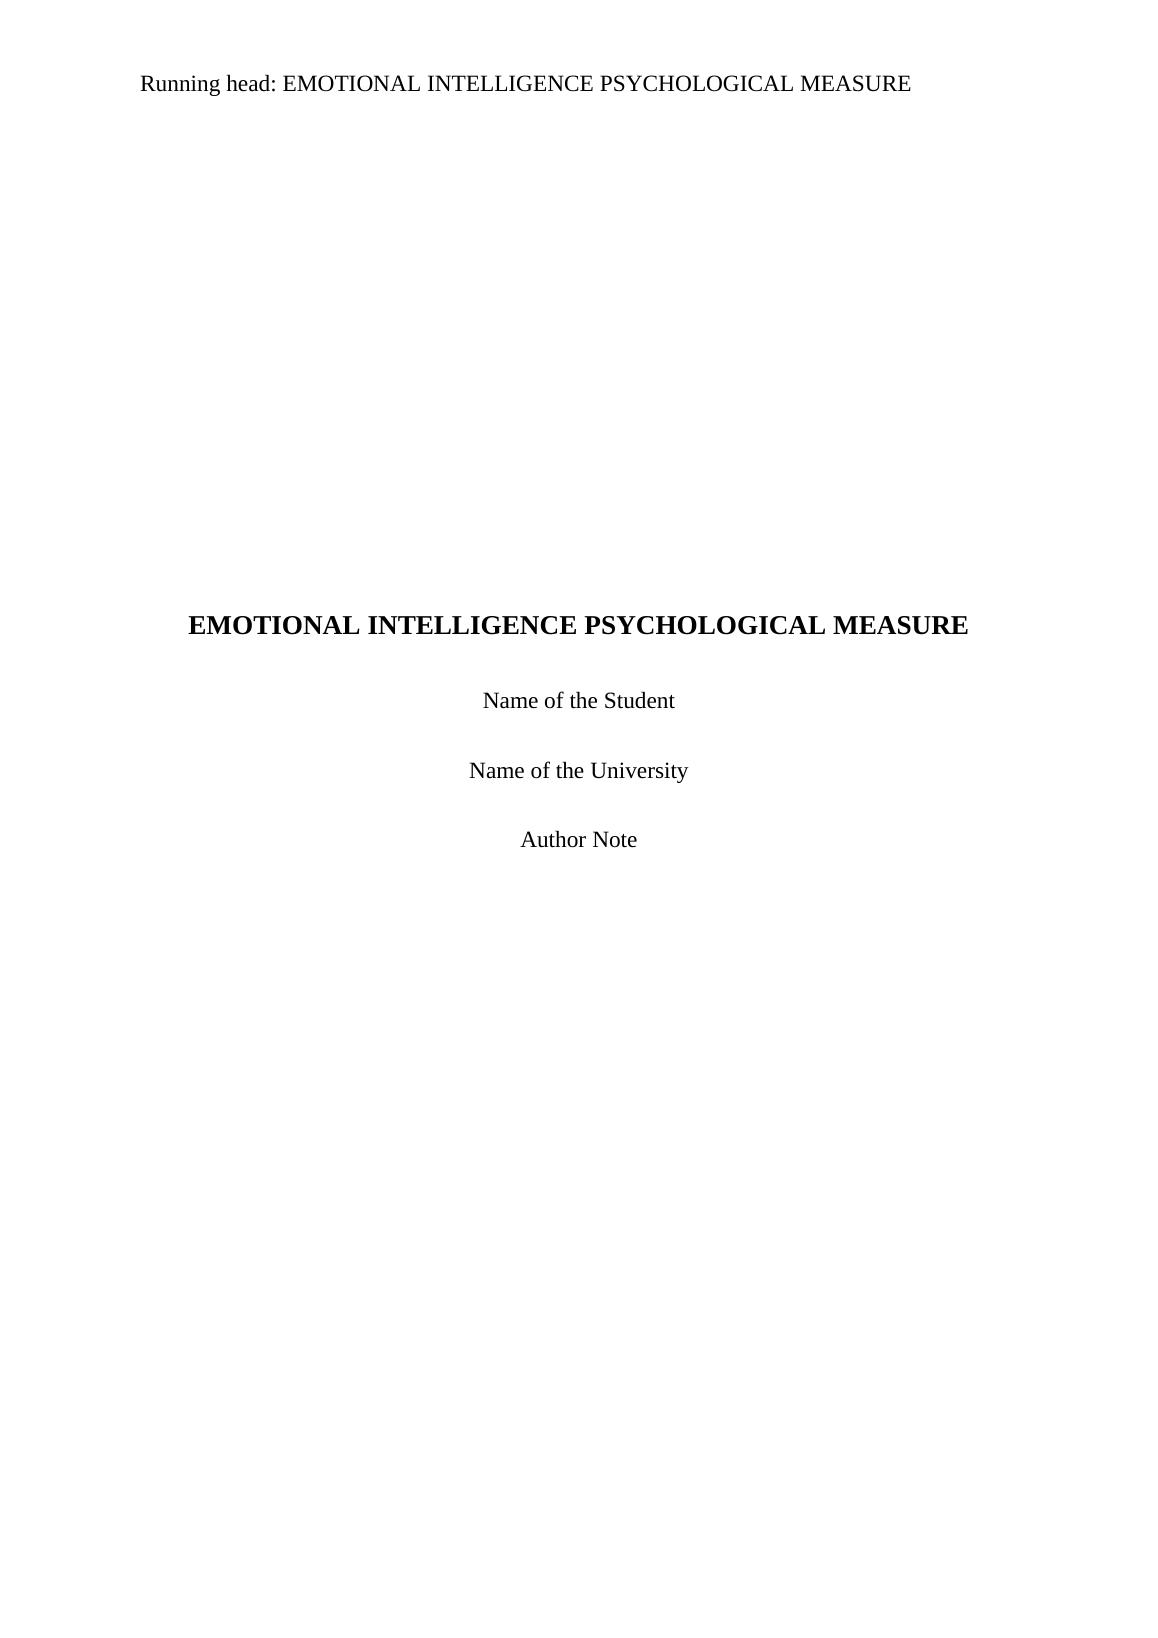 Emotional Intelligence-psychological Measure Assignment 2022_1